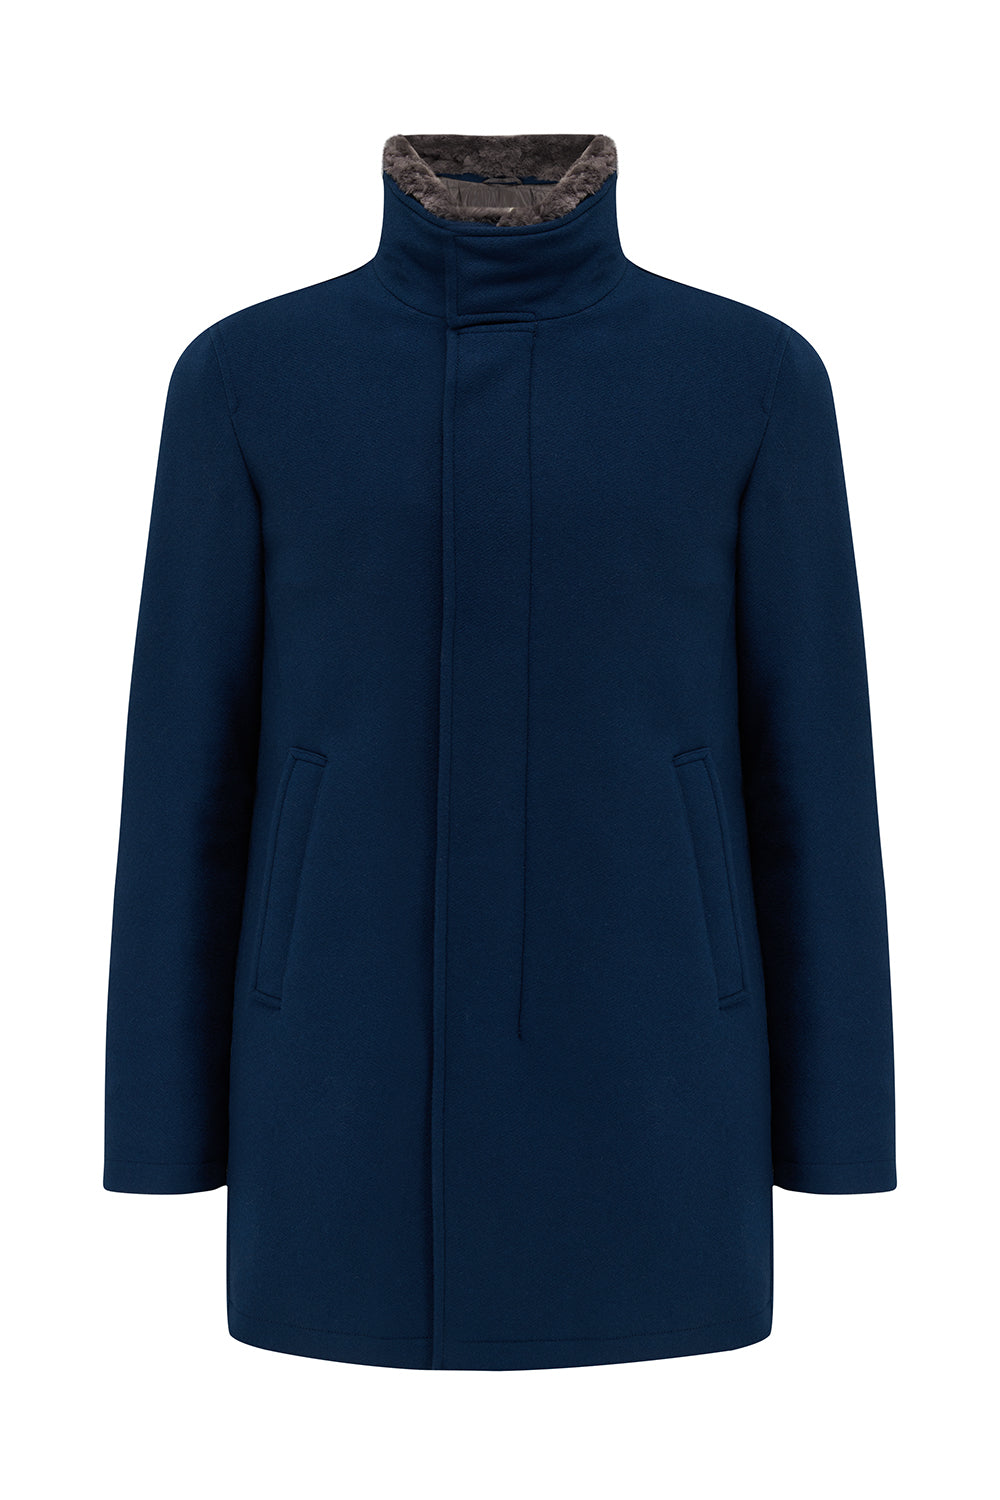 Herno Men's Mink Collar Jacket Blue - Front View